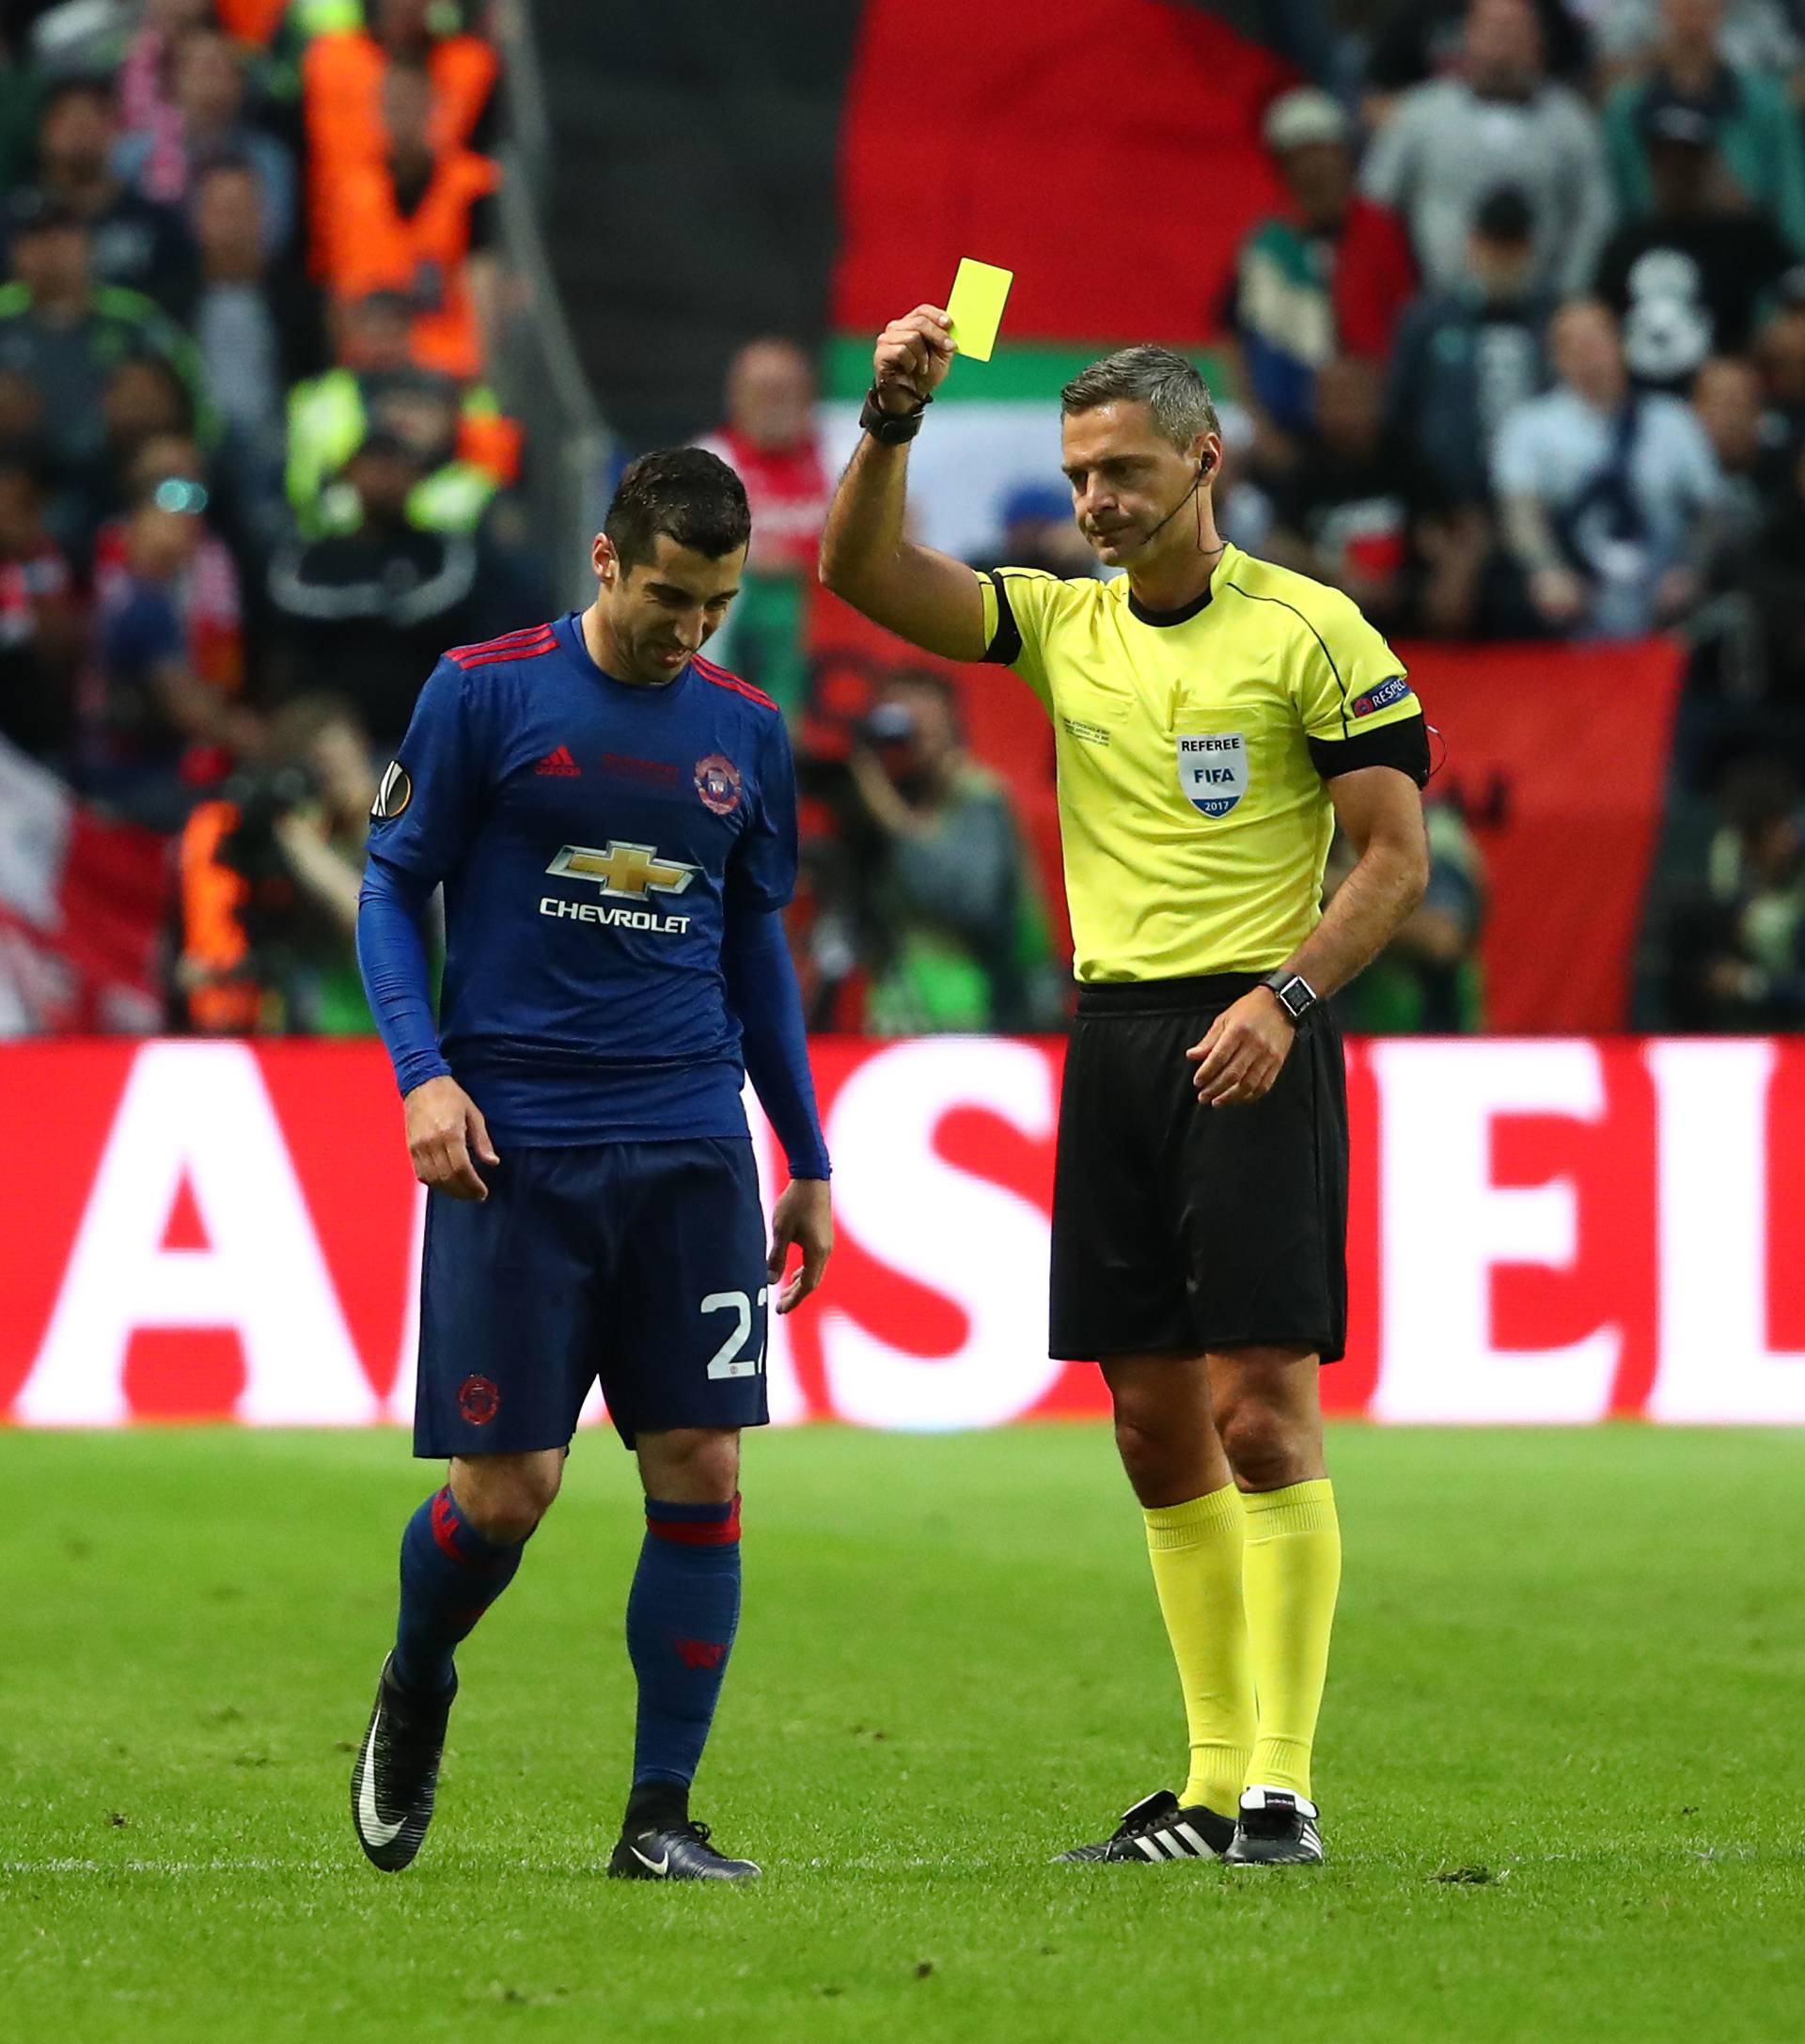 Manchester United's Henrikh Mkhitaryan is shown a yellow card by referee Damir Skomina for a foul on Ajax's Joel Veltman